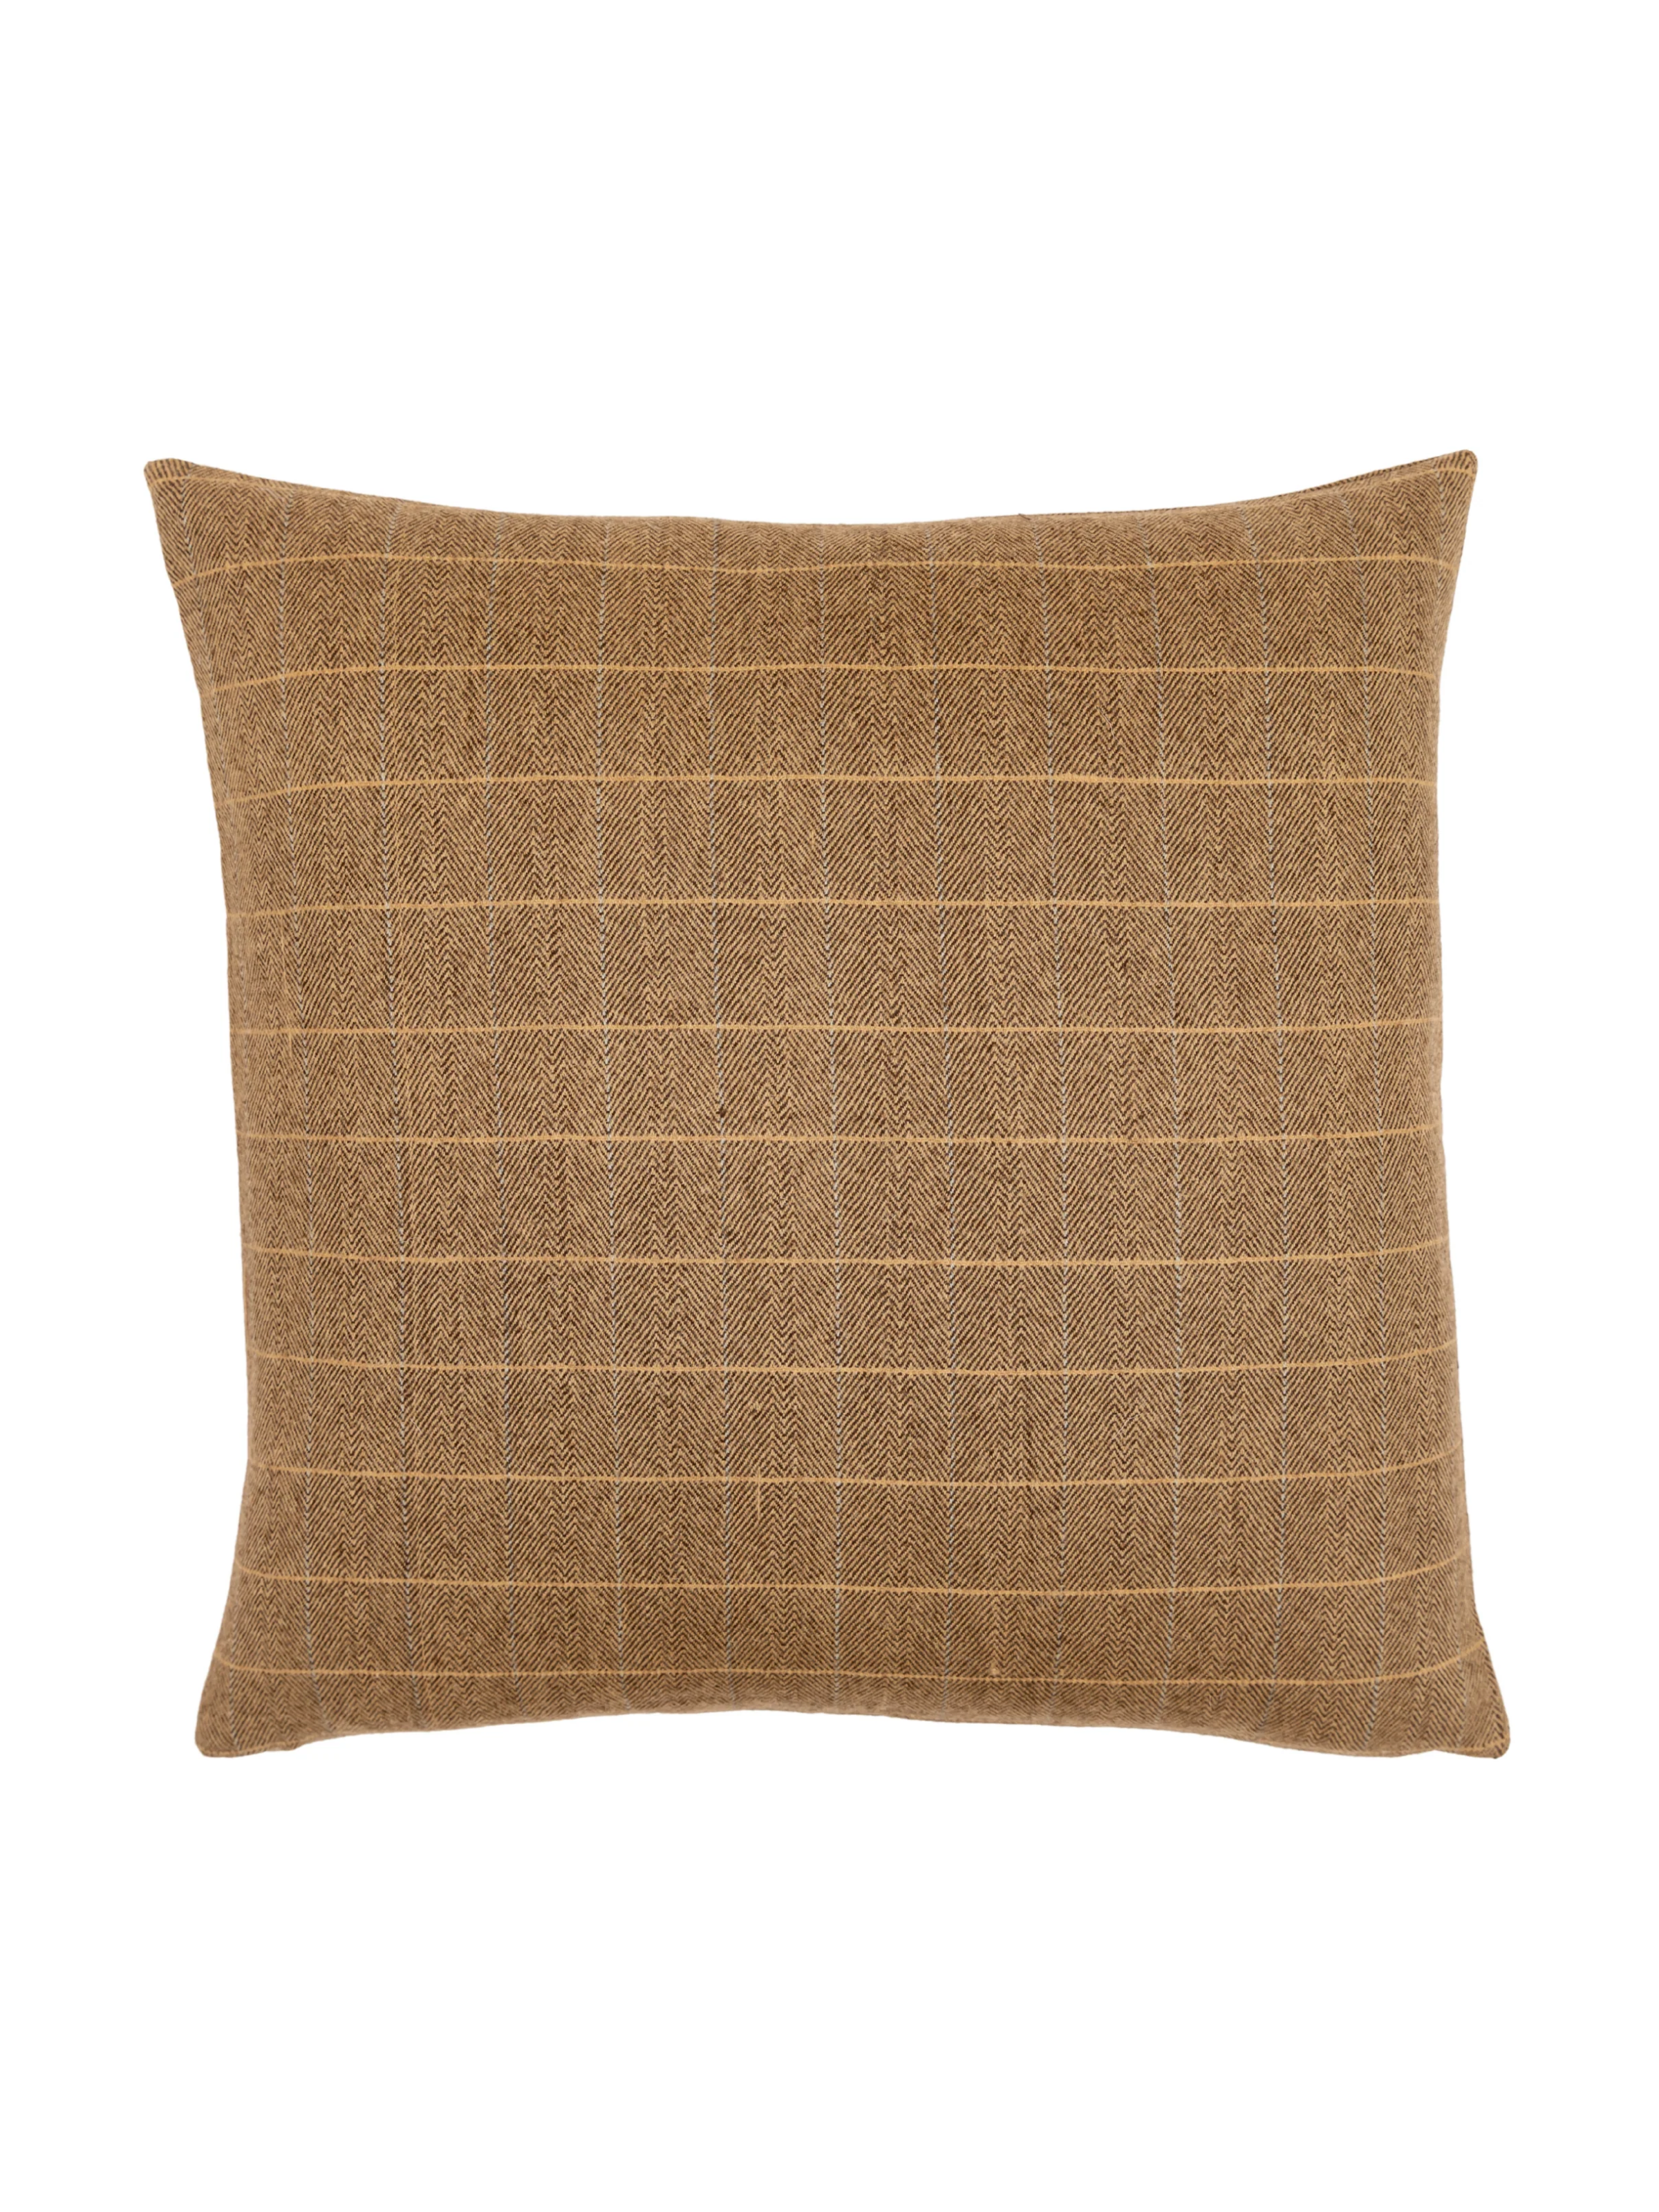 Highlands Sandstone Herringbone Wool Pillow